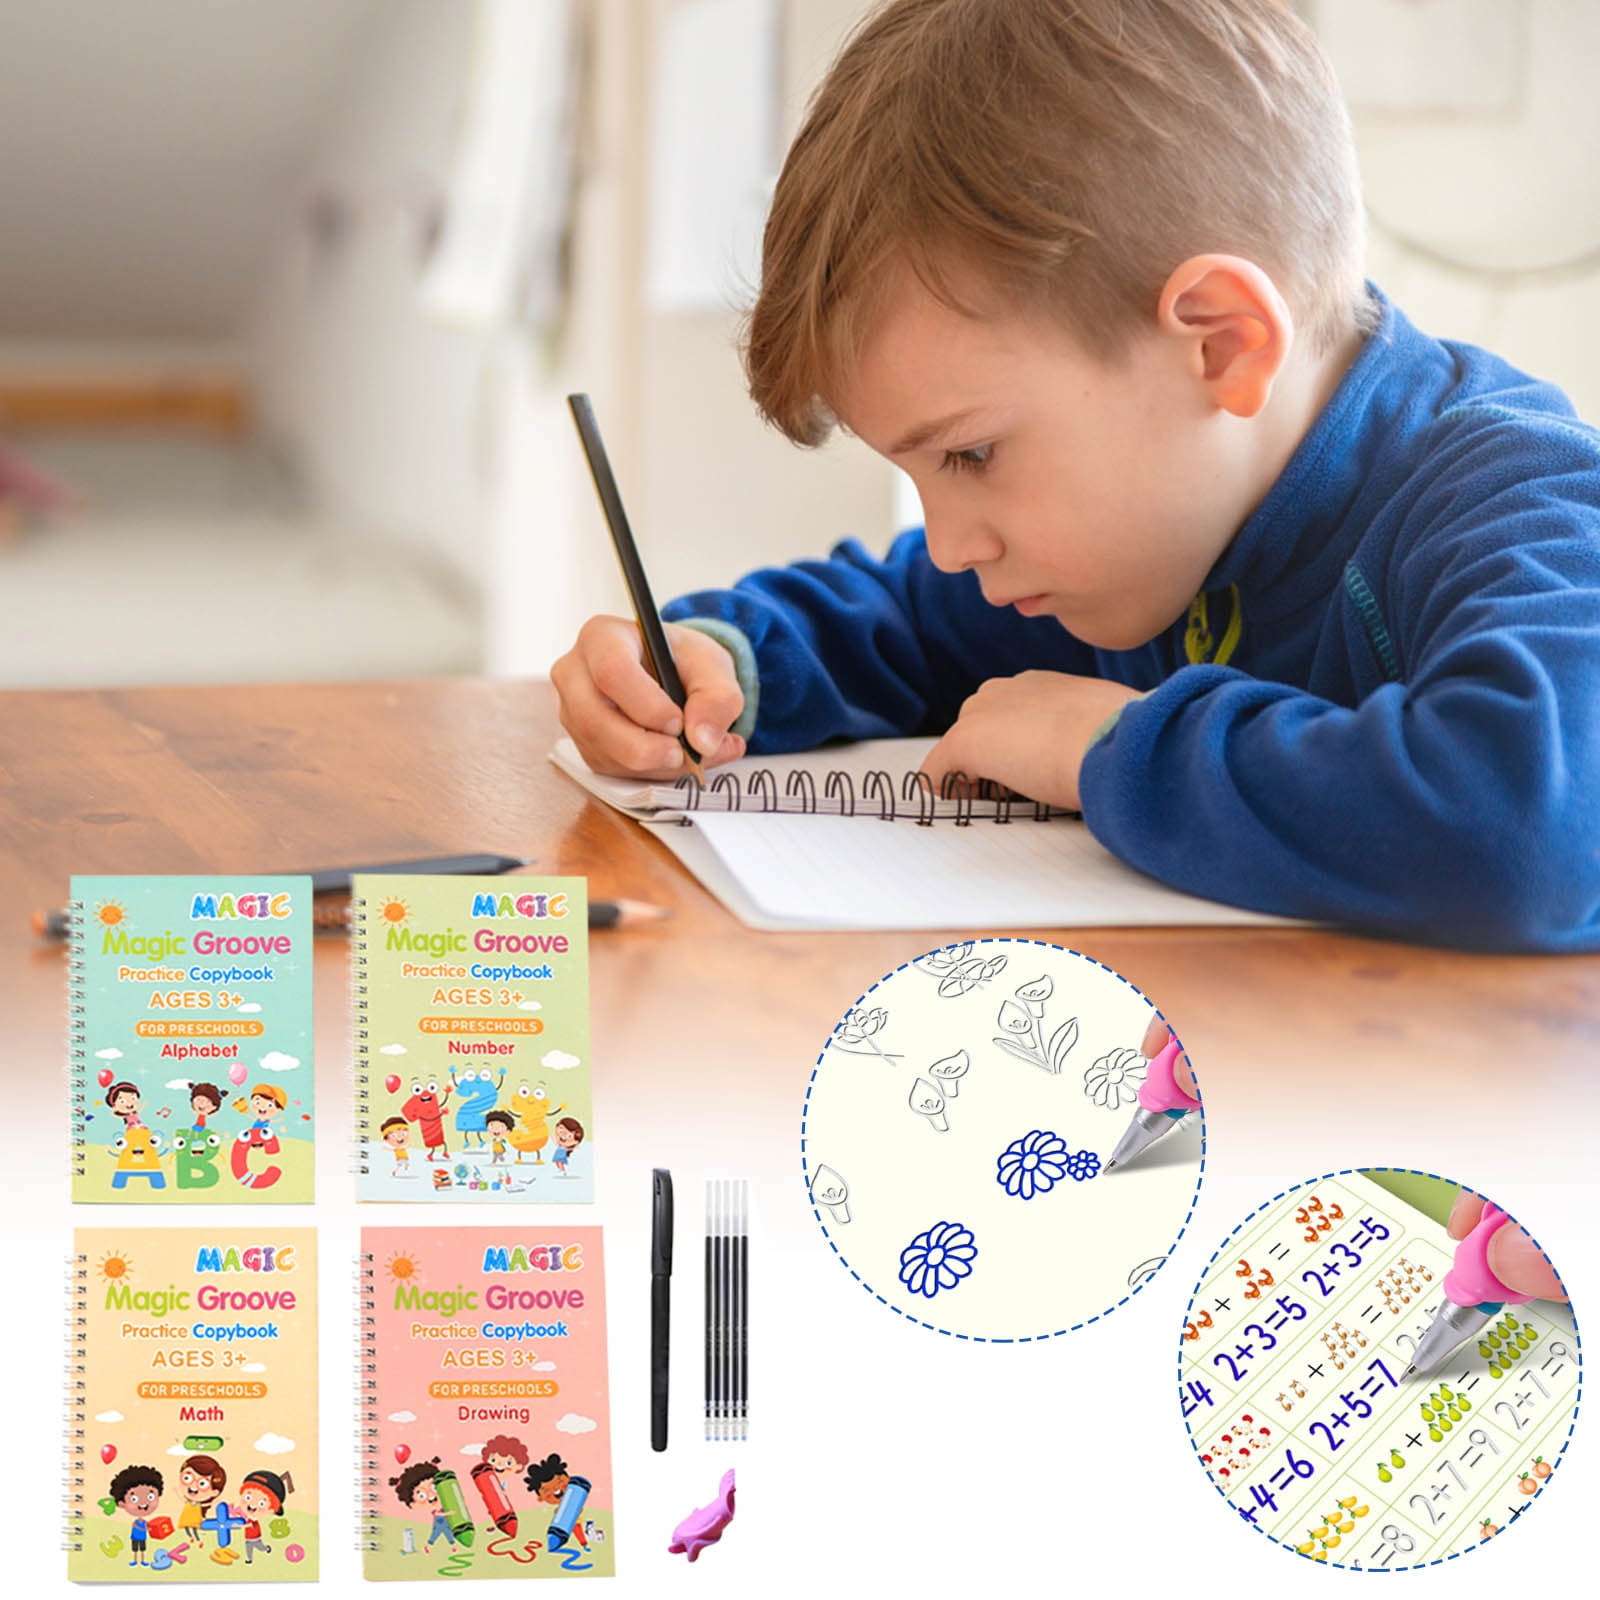 Deals4Pcs Magic Reusable Practice Copybook for Kids,Magic Reusable Practice Copybook,Grooves Template Design and Handwriting Aid Practice Copybook for